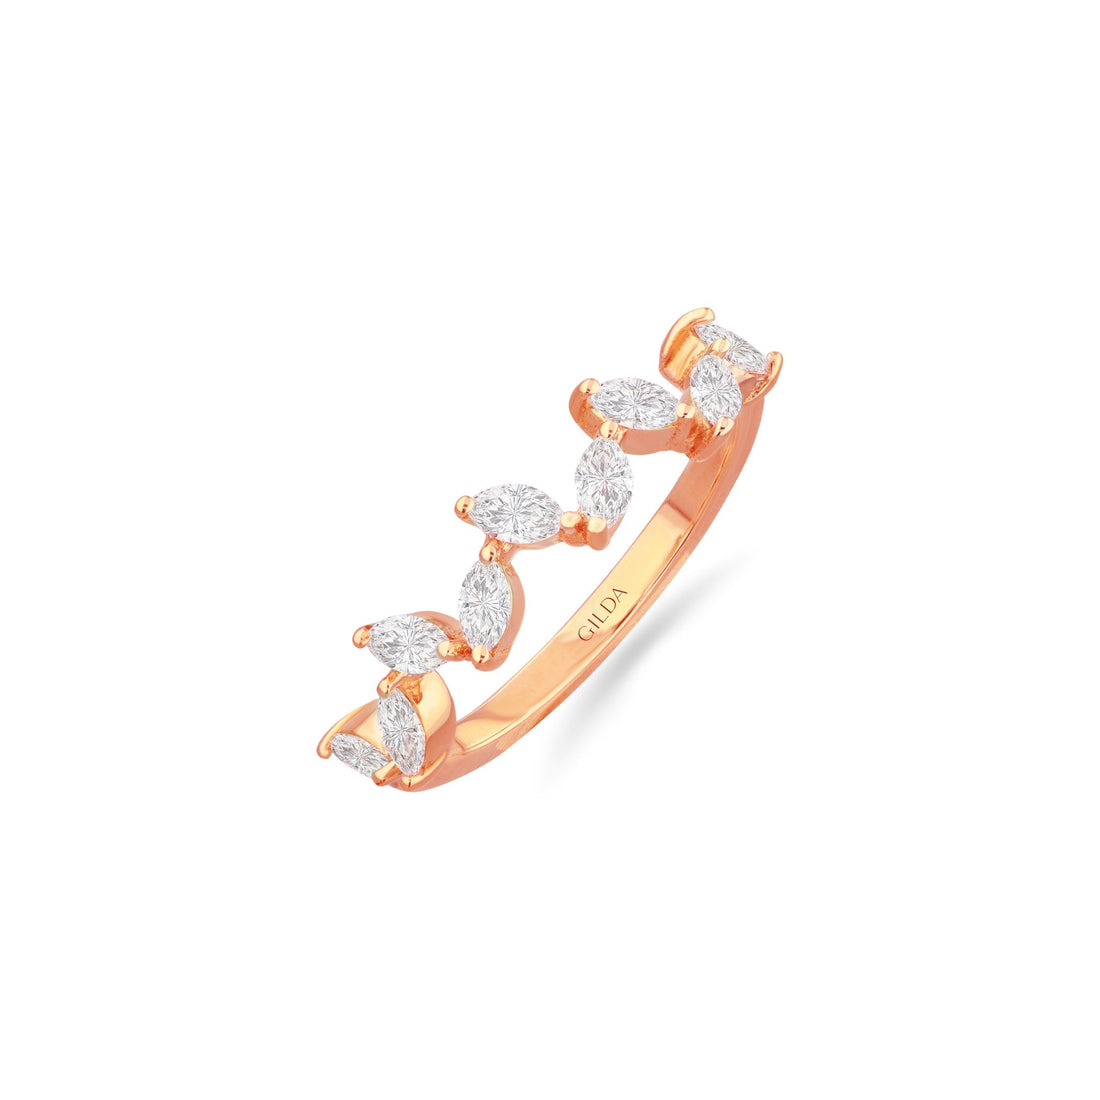 Gilda Jewelry Allure | Diamond Ring | 0.58 Cts. | 18K Gold - Rose / 6 / Diamonds - ring Zengoda Shop online from